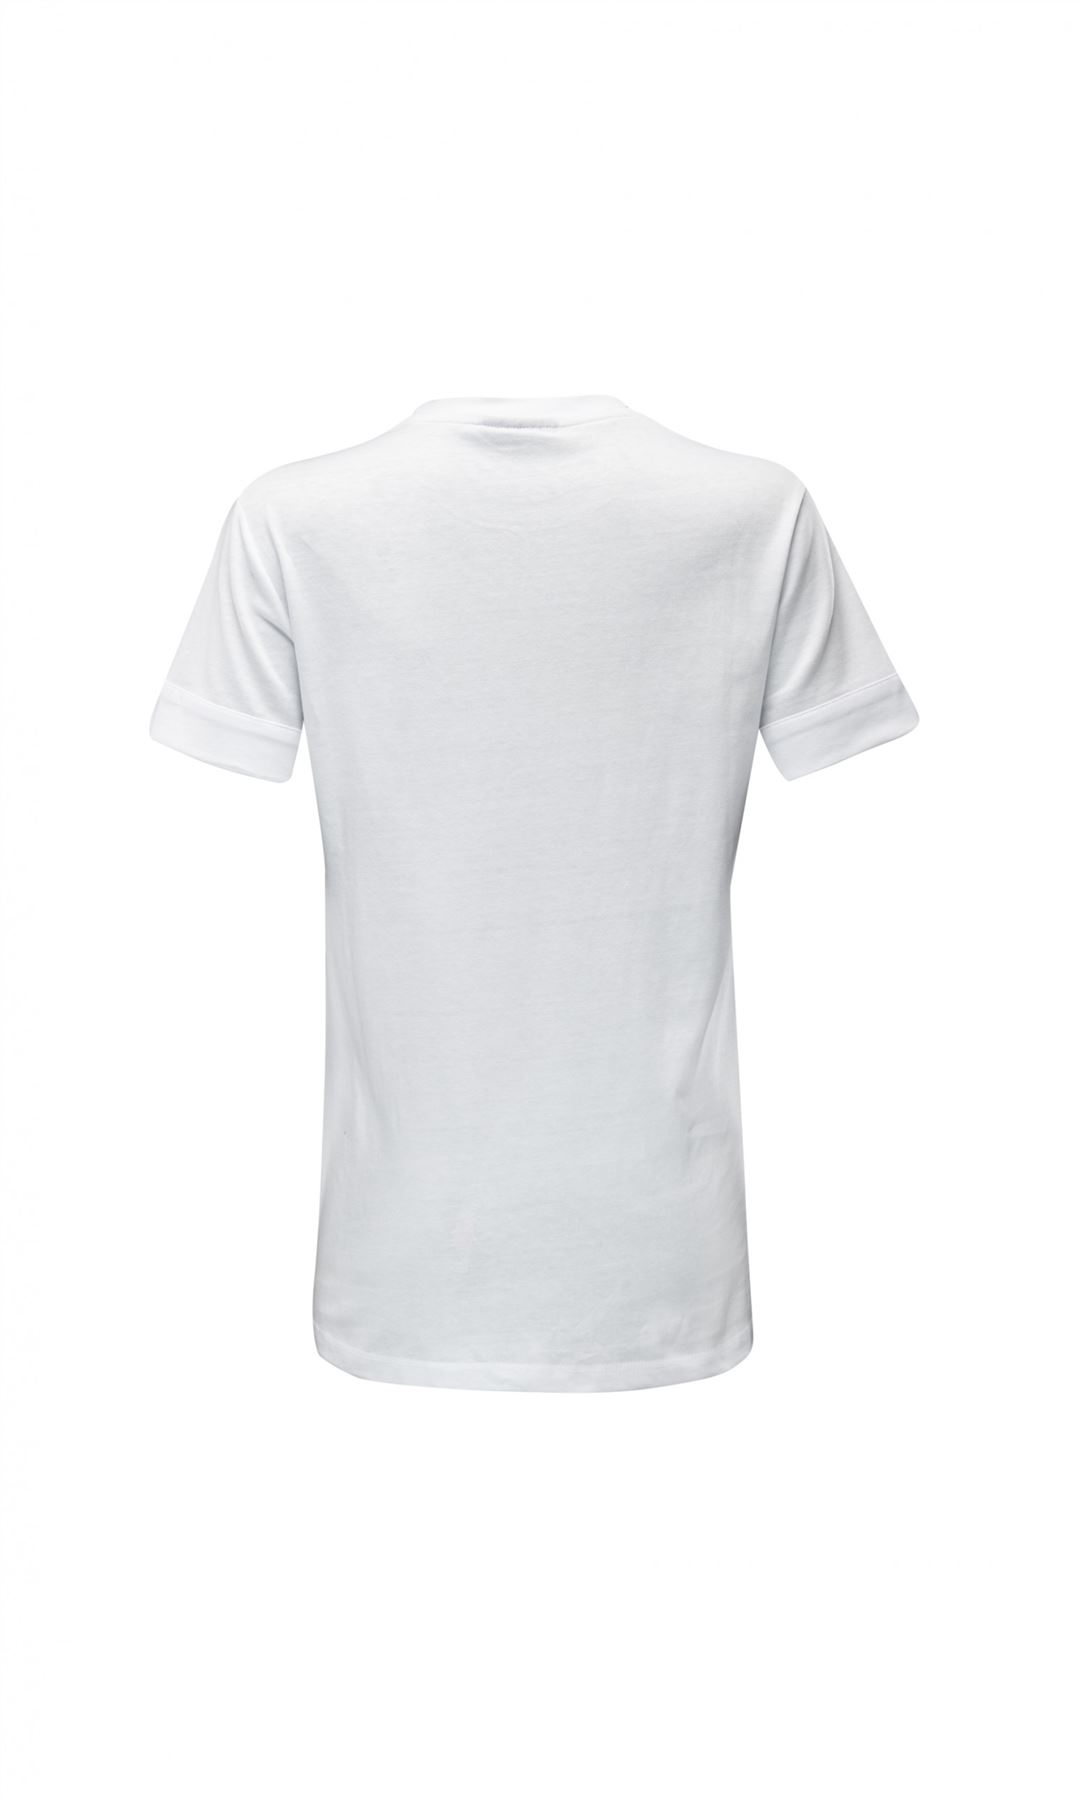 Everlast Lawrence 2 W T-Shirt